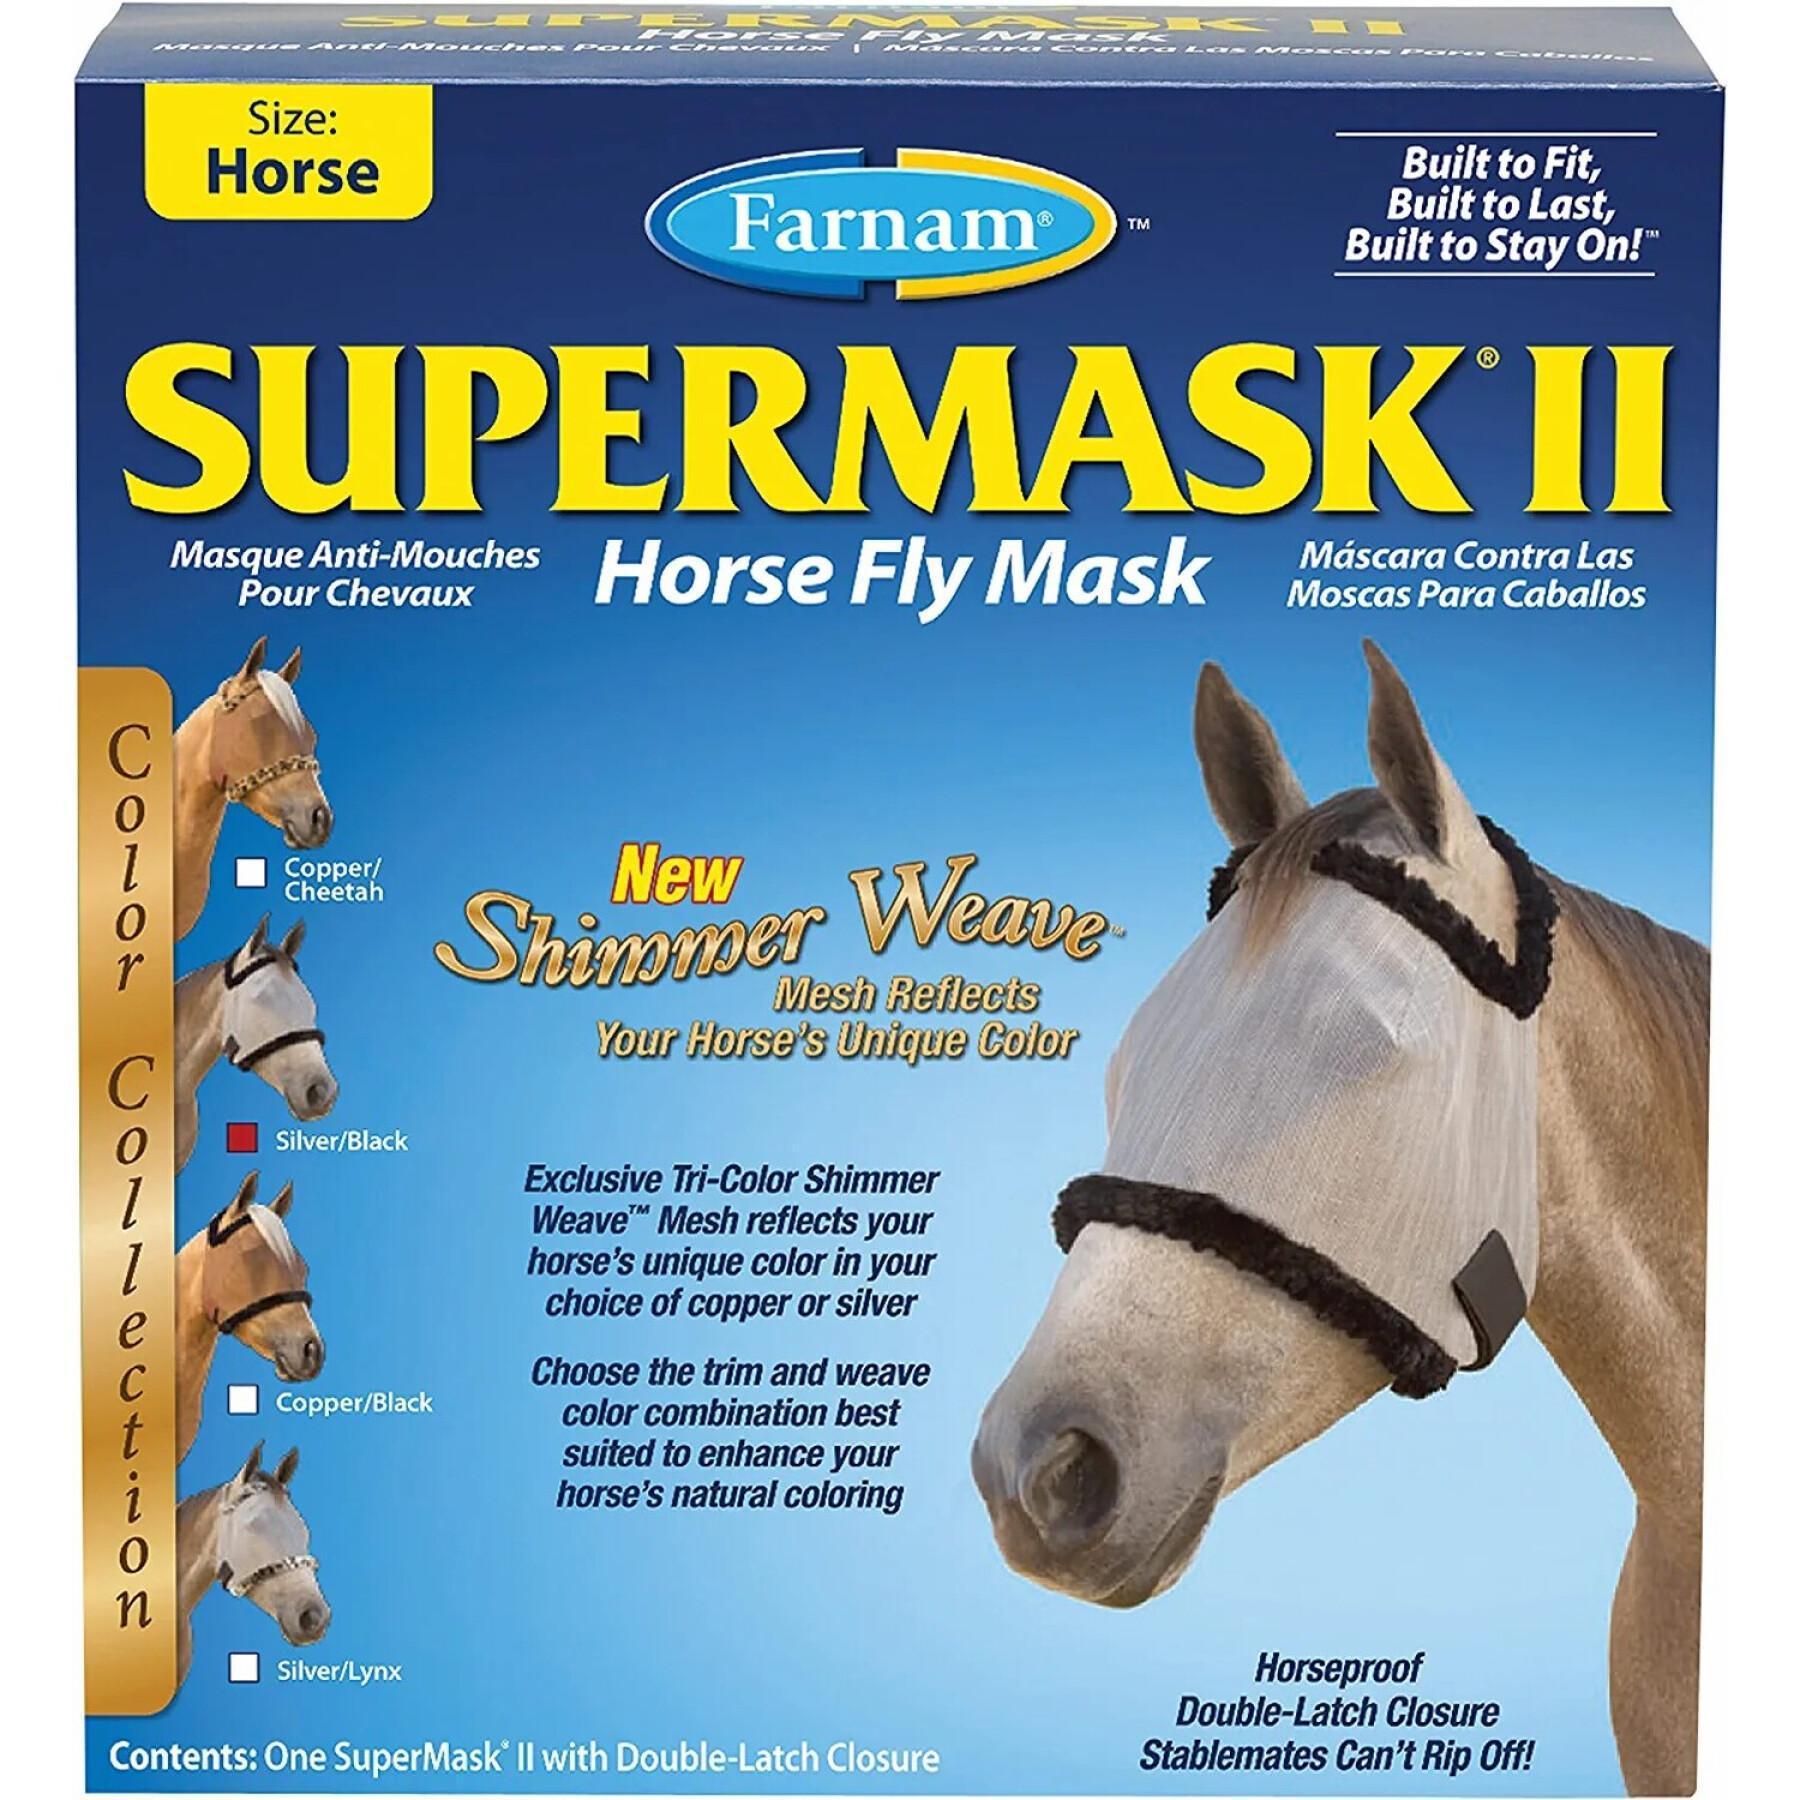 Masque anti-mouches pour cheval sans oreilles Farnam Supermask II Arab arab